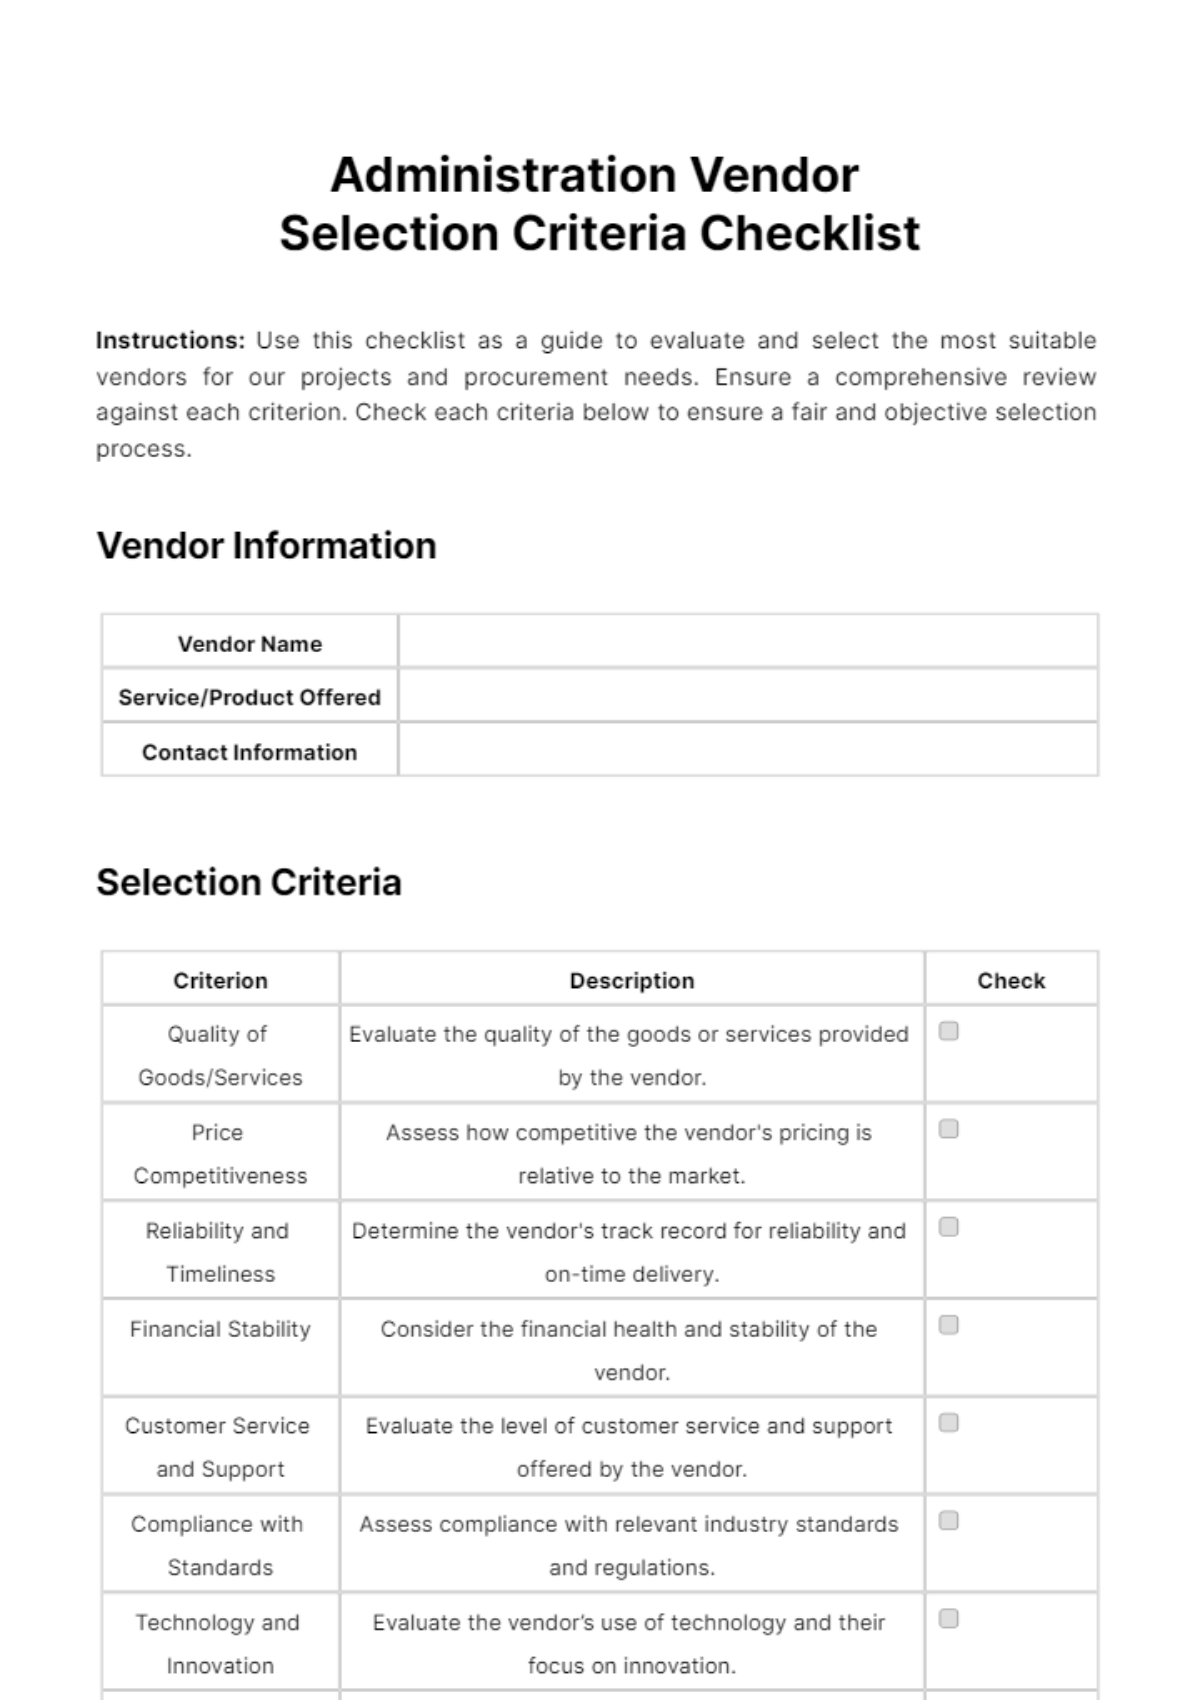 Administration Vendor Selection Criteria Checklist Template